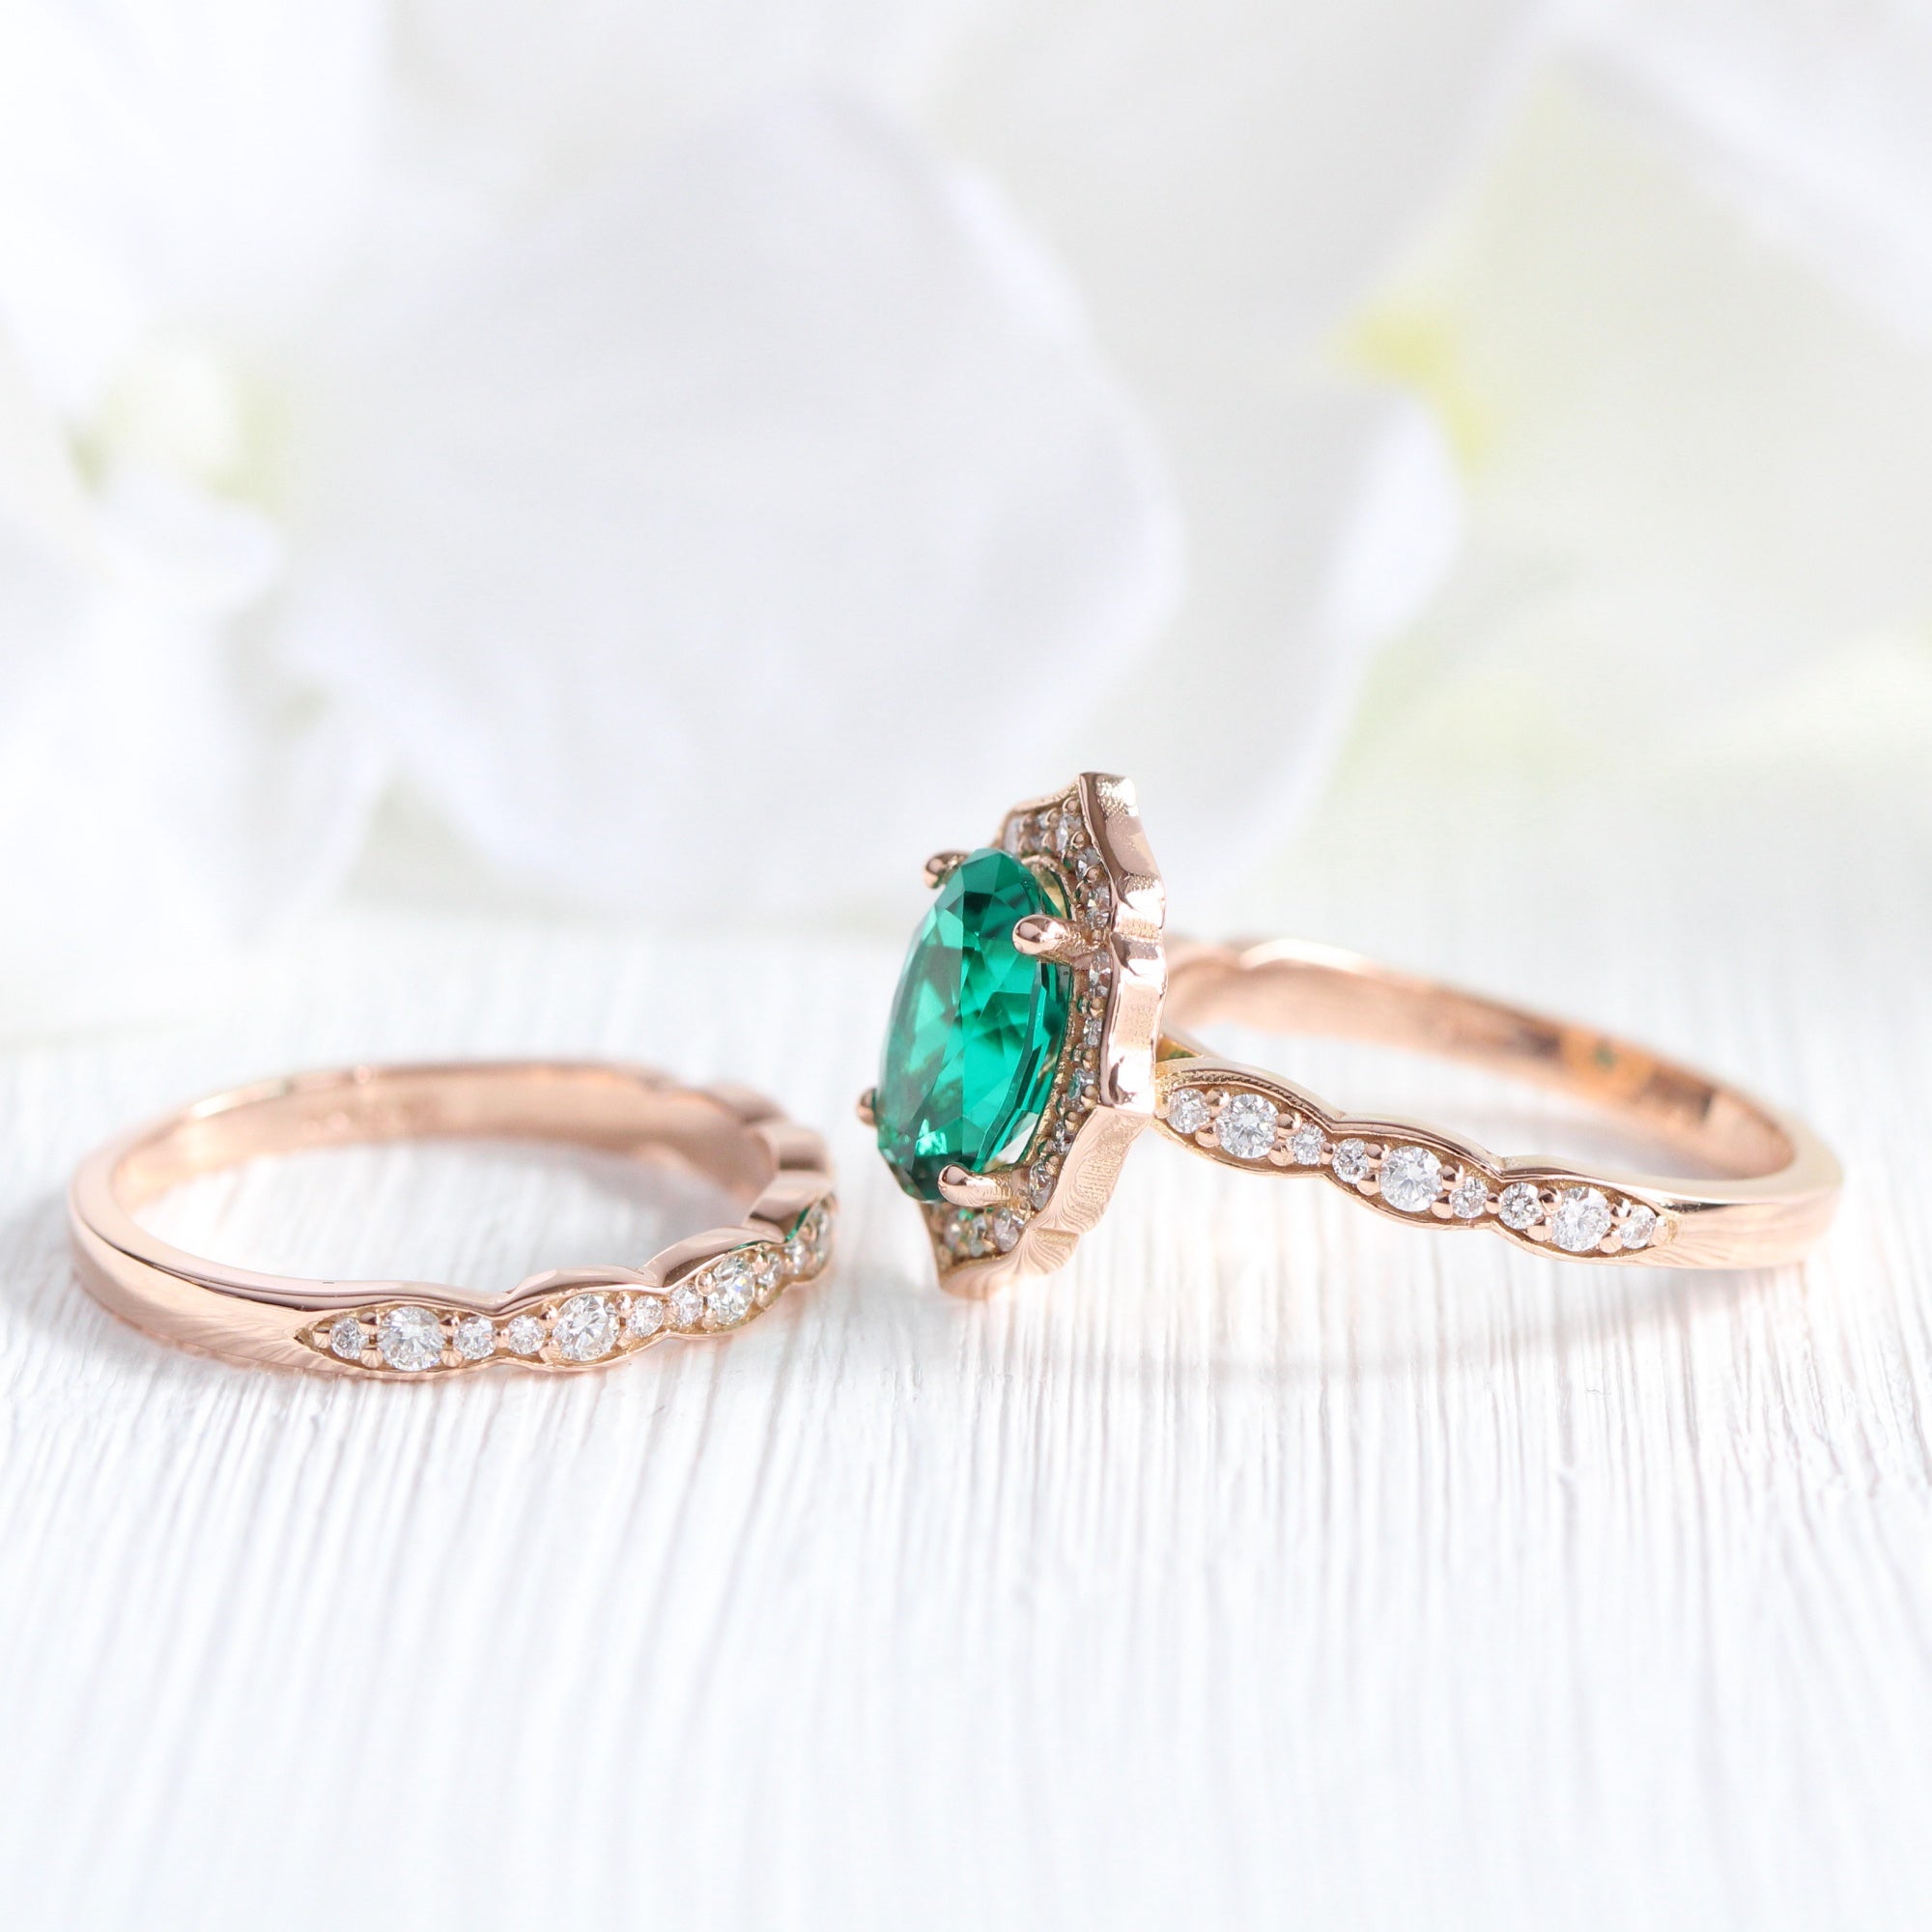 xVintage halo large emerald ring stack rose gold matching diamond wedding band la more design jewelry